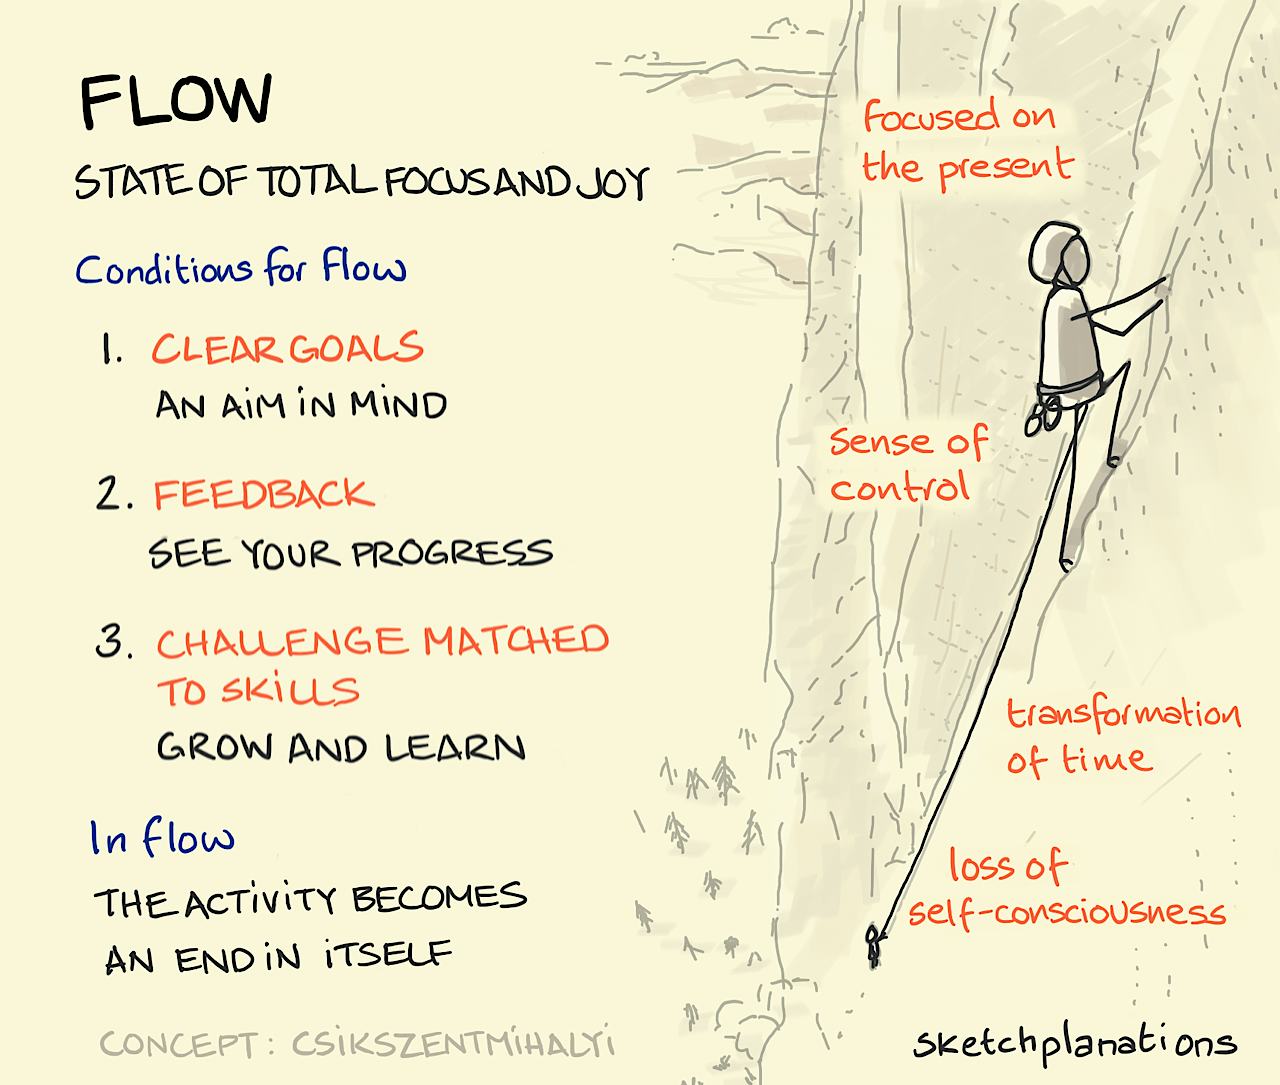 Flow - Sketchplanations